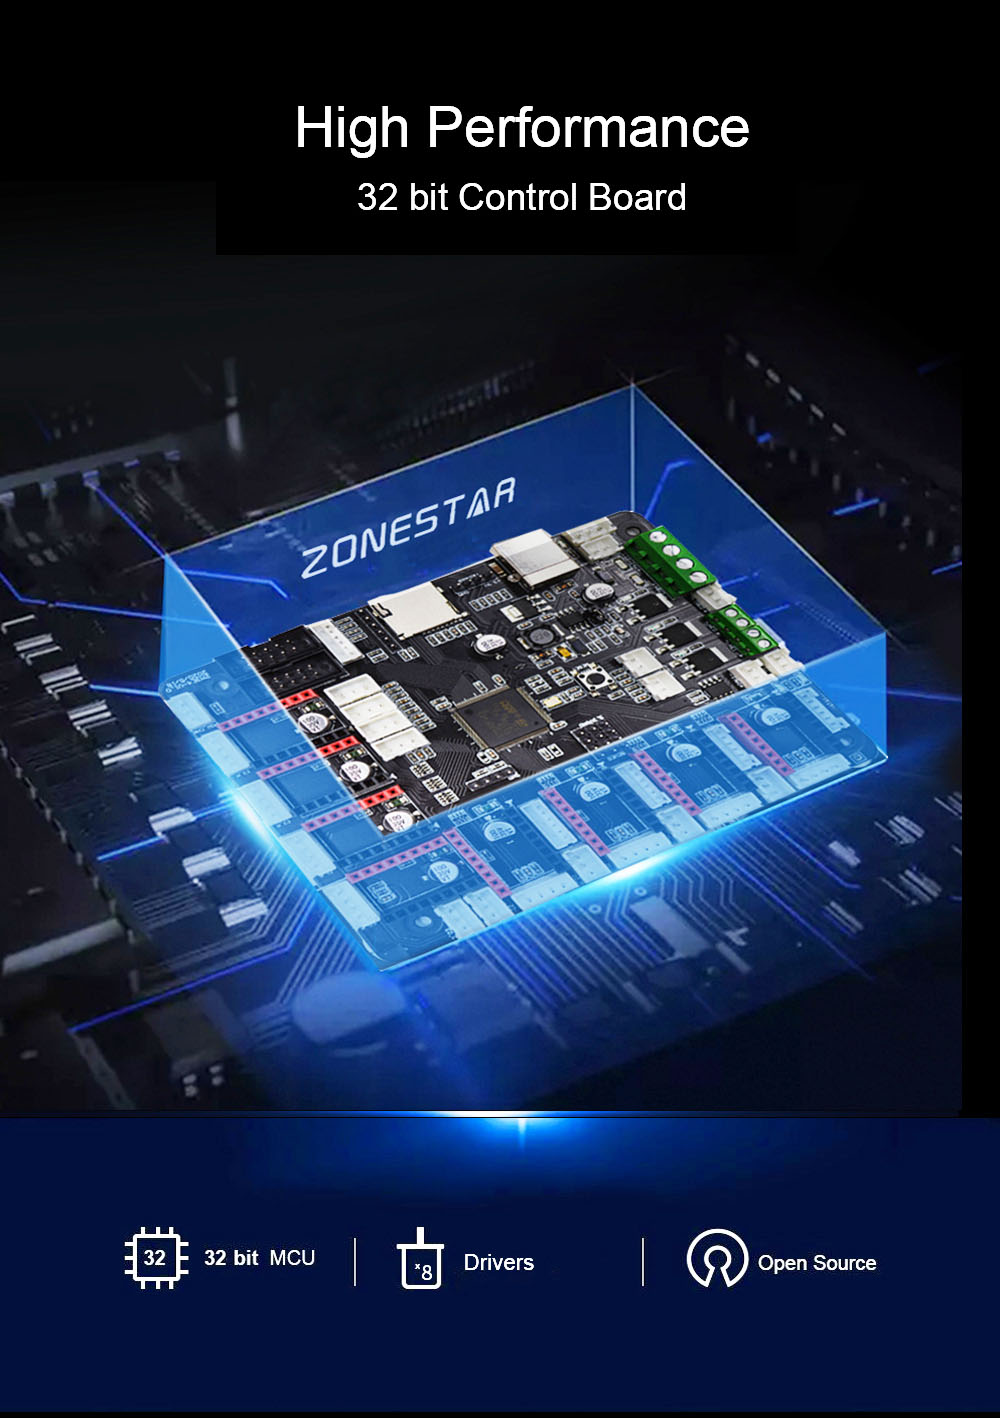 Zonestar Z8PM3 Extruder 3-IN-1-OUT Εκτυπωτής 3D με μίξη χρωμάτων Οθόνη LCD υψηλής ακρίβειας Κιτ DIY - Μαύρο